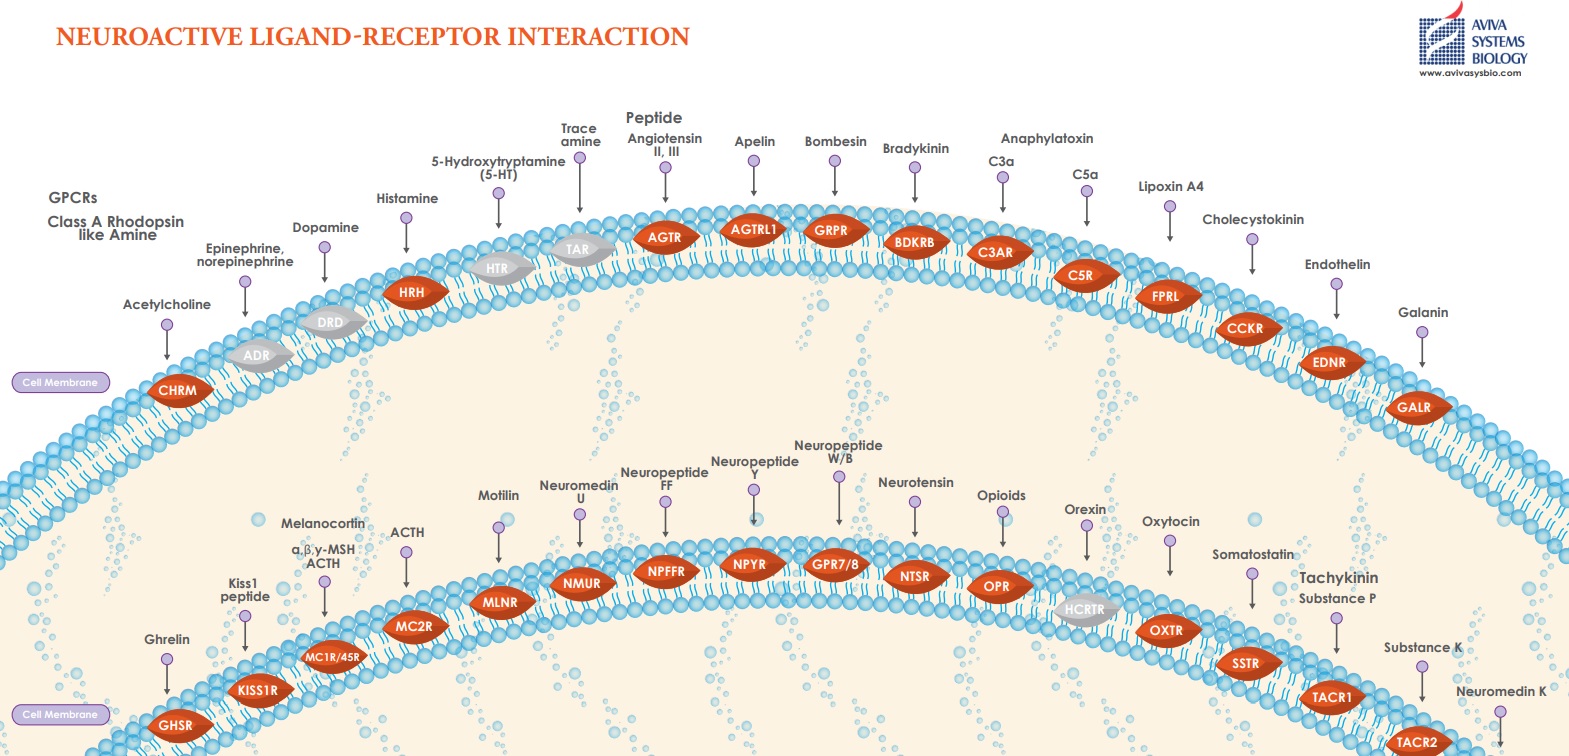 Aviva Systems Biology: Neuroactive Ligand-Receptor Interaction Scientific Pathway Poster